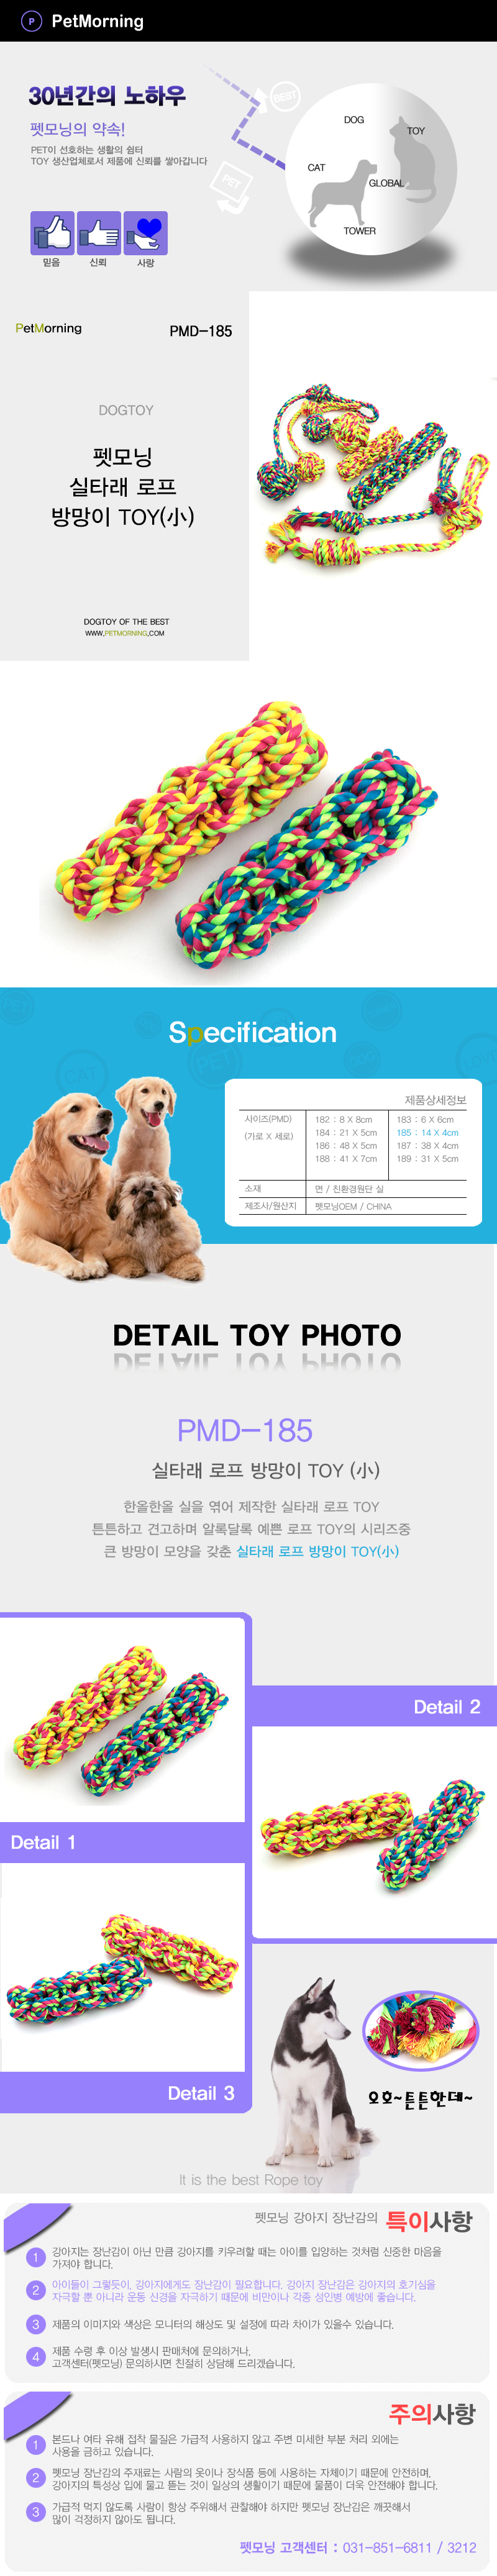 PMD-185_800_detail.jpg